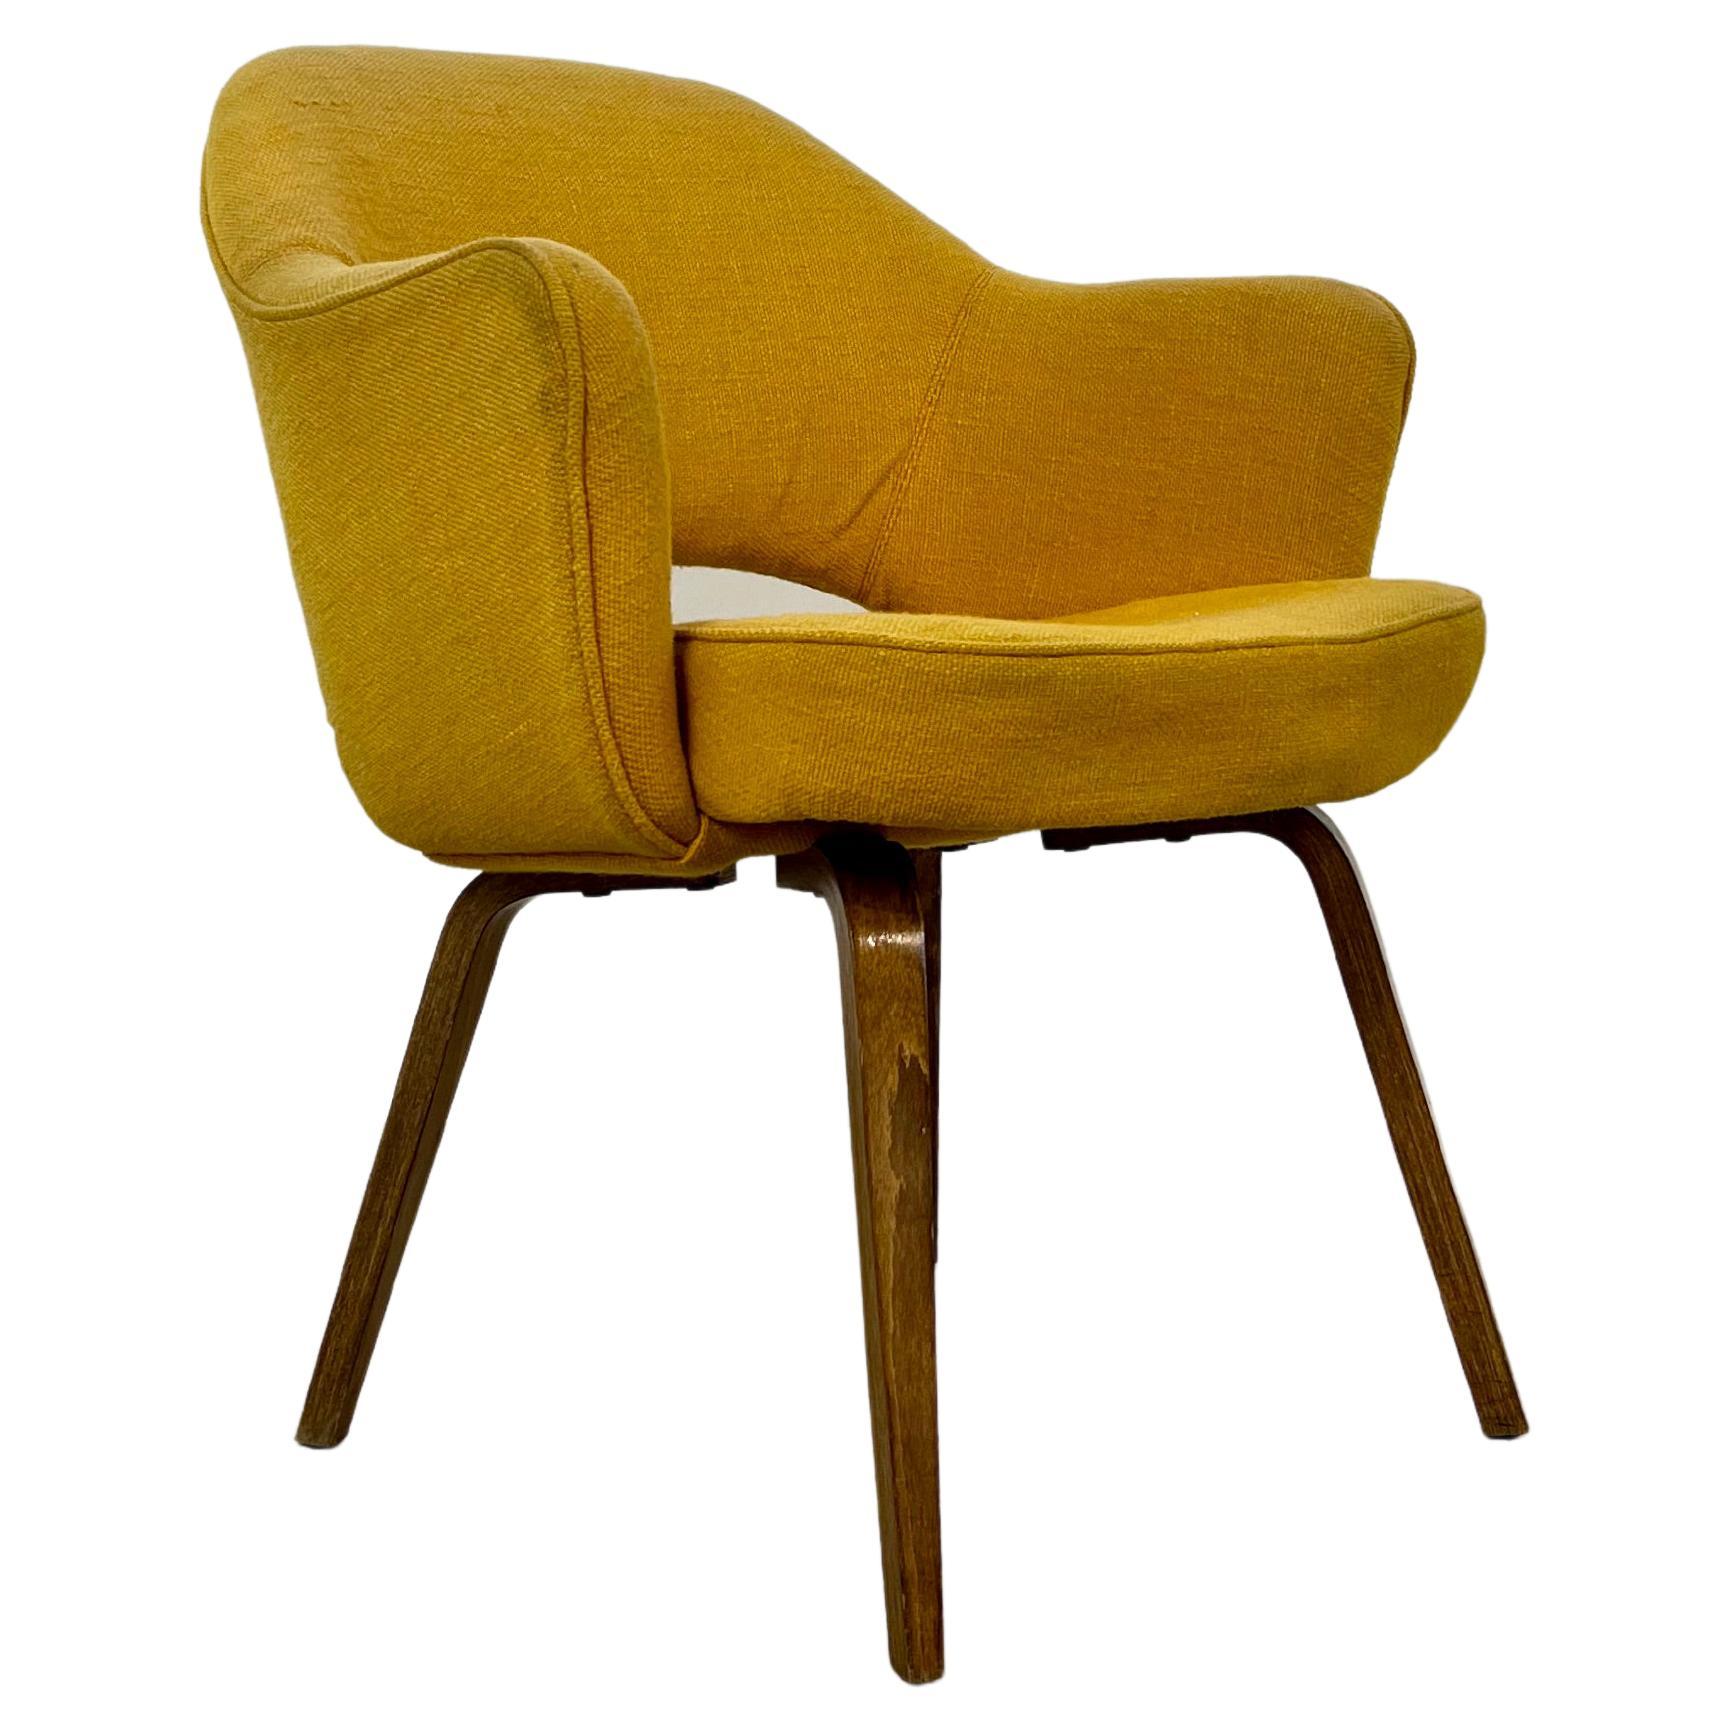 Executive Armchair by Eero Saarinen for Knoll Inc. / Knoll International, 1960s